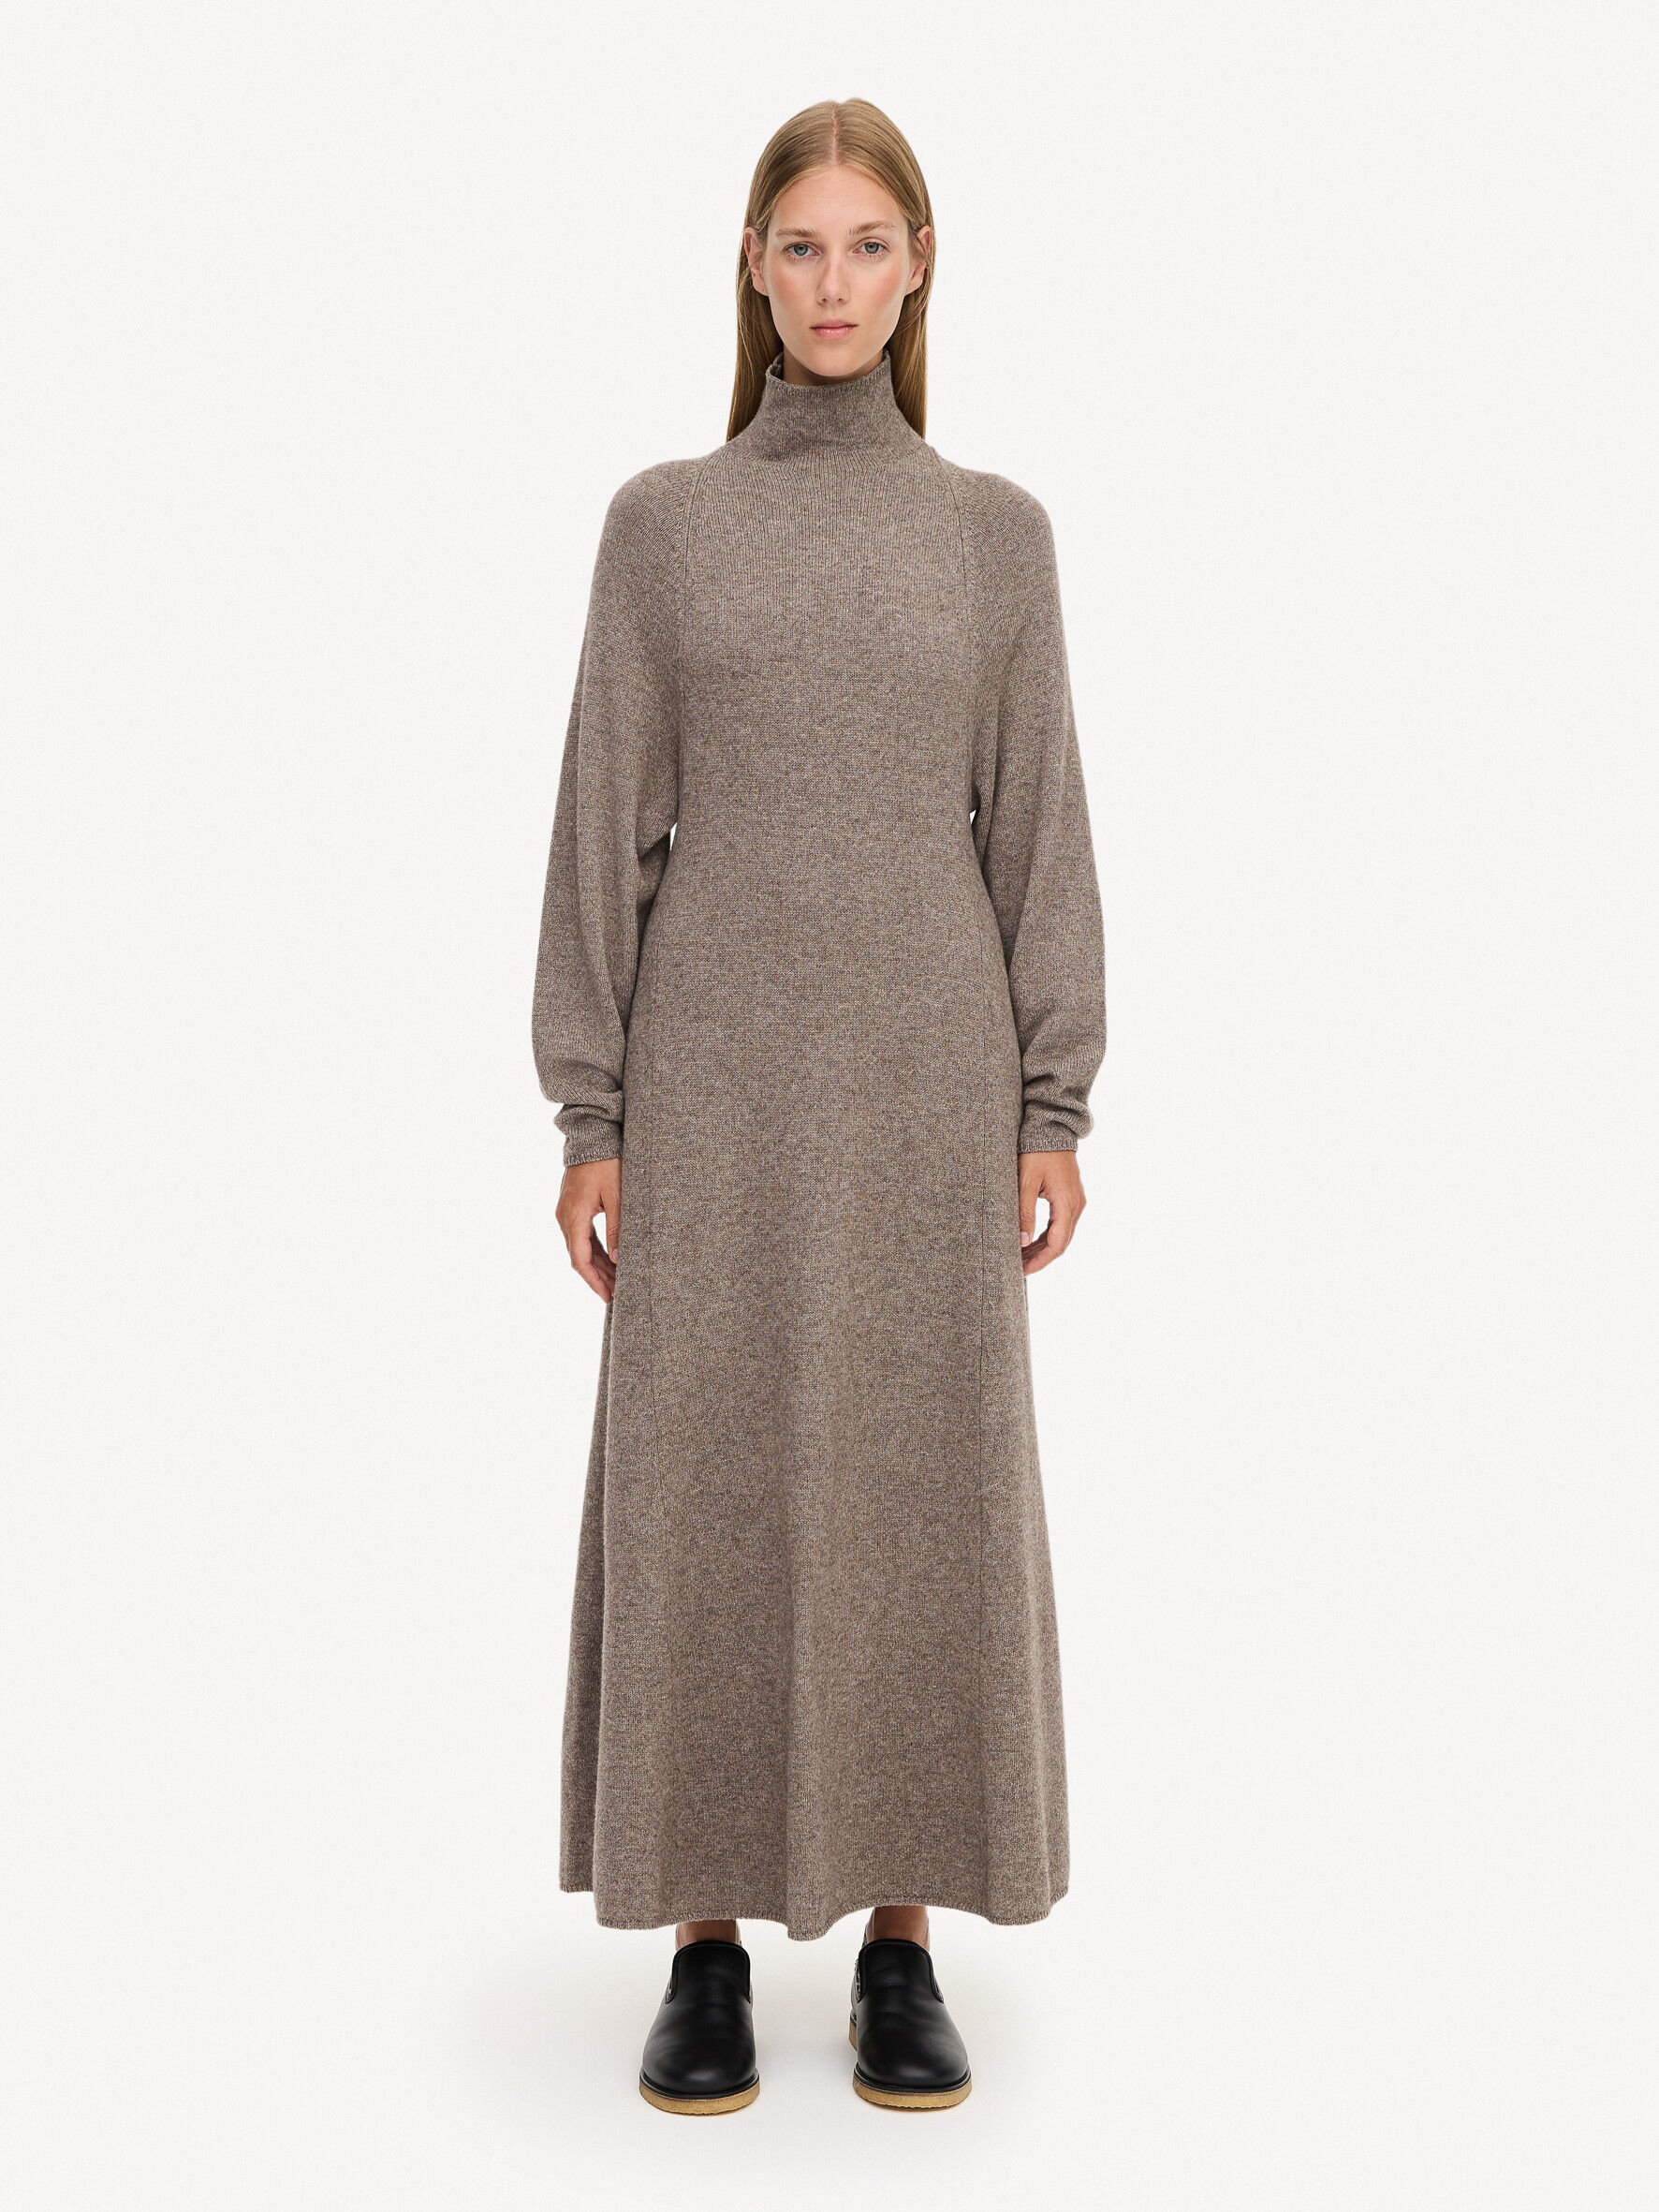 Saige maxi dress - Buy Winter sale online